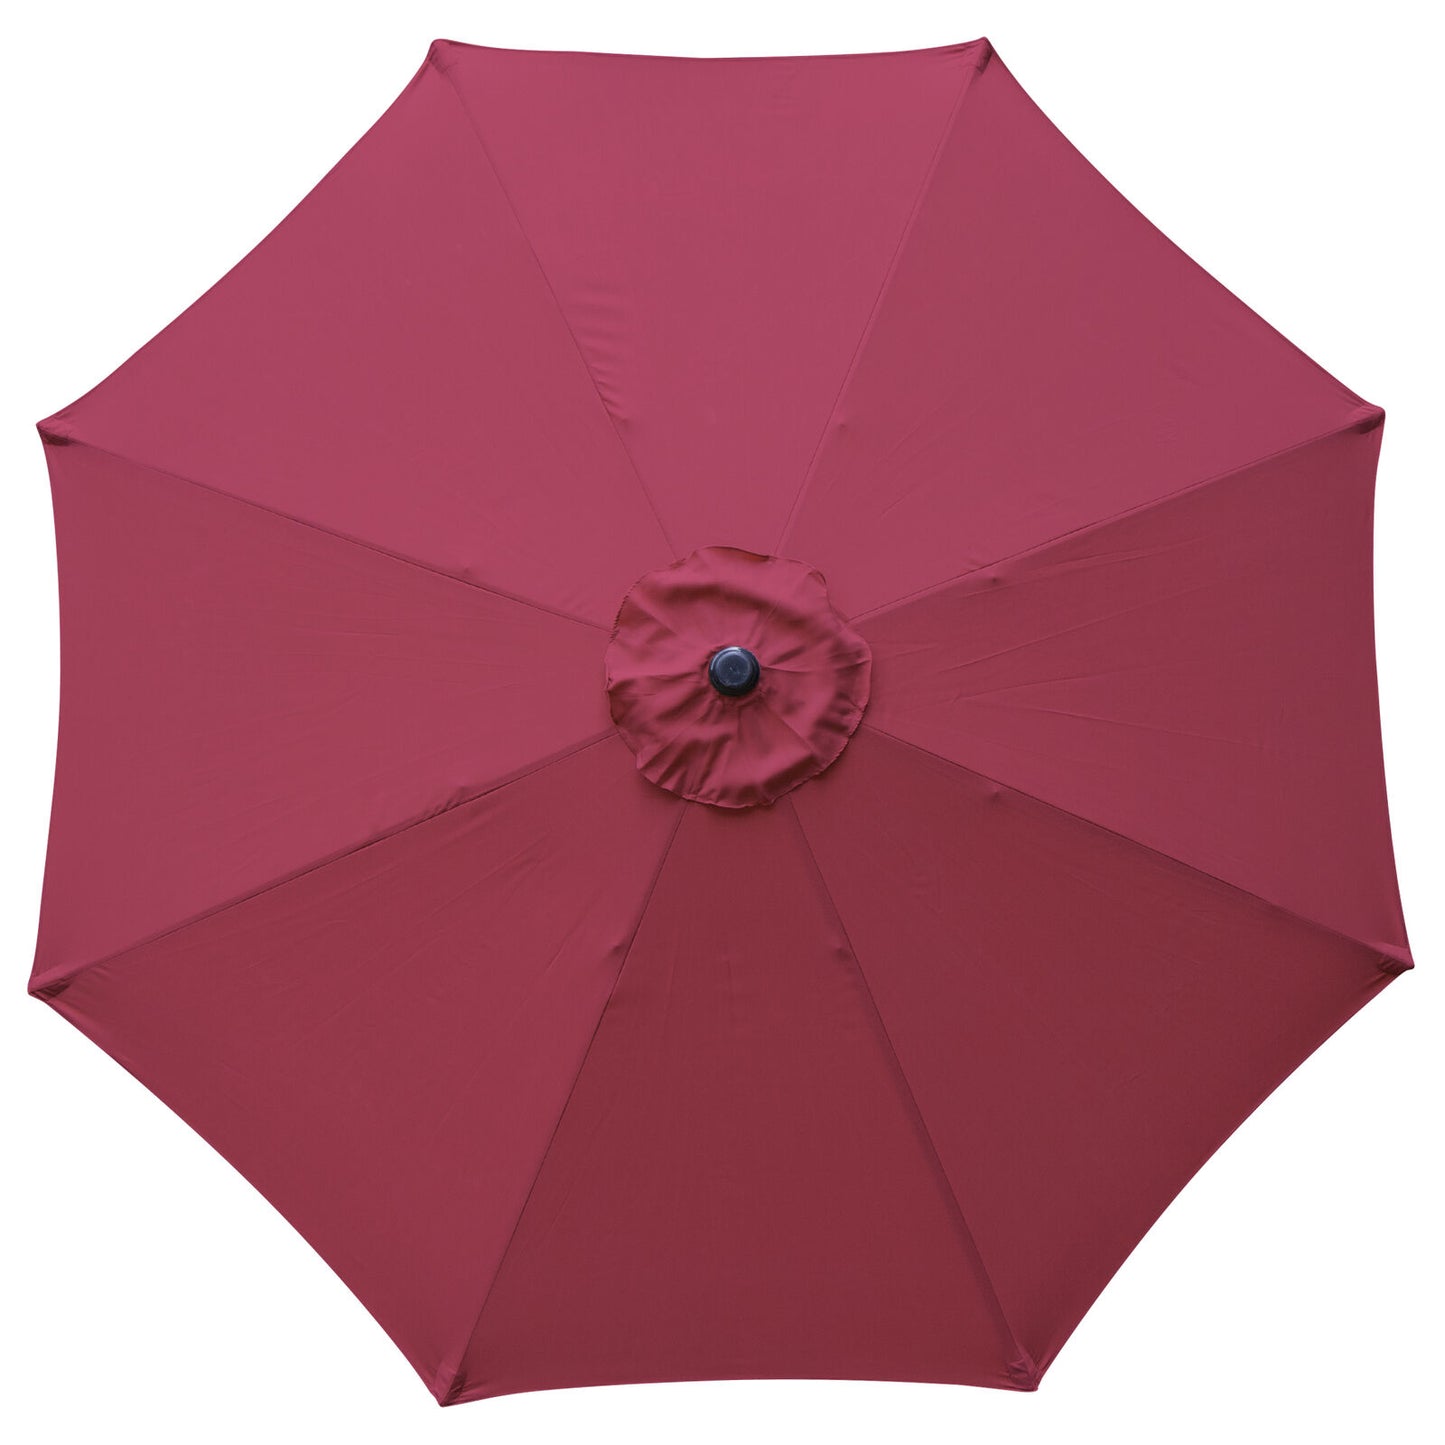 Red Patio 9ft Umbrella Outdoor Market Table Umbrella with Push Button Tilt Crank